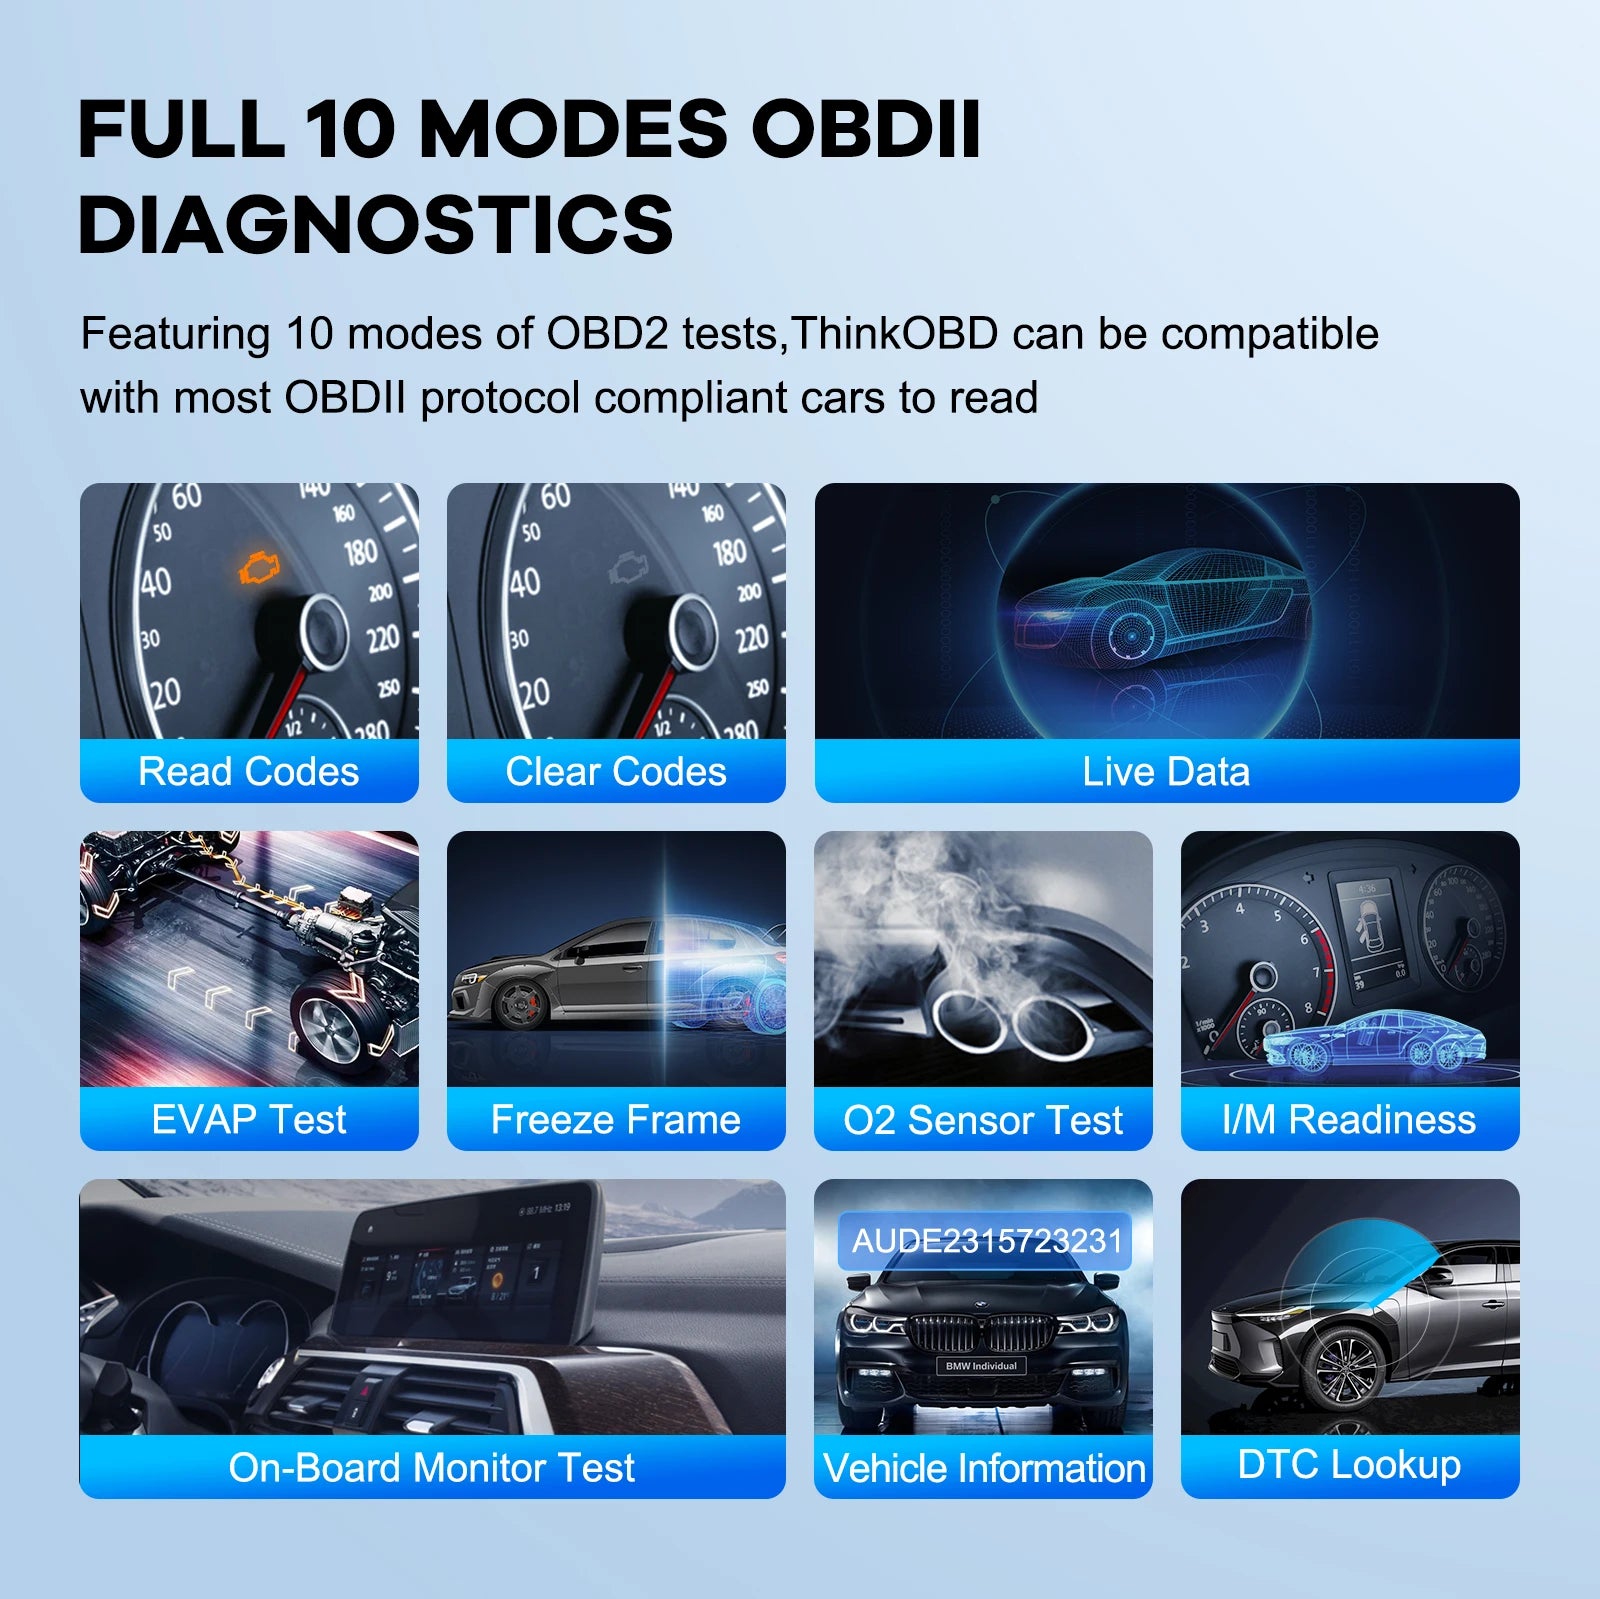 MUCAR CDL20 Obd2 Car Auto Diagnostic Tools Obd 2 Scanner Automotivo Code Reader Check Engine Full OBD 2 Functions Lifetime Free